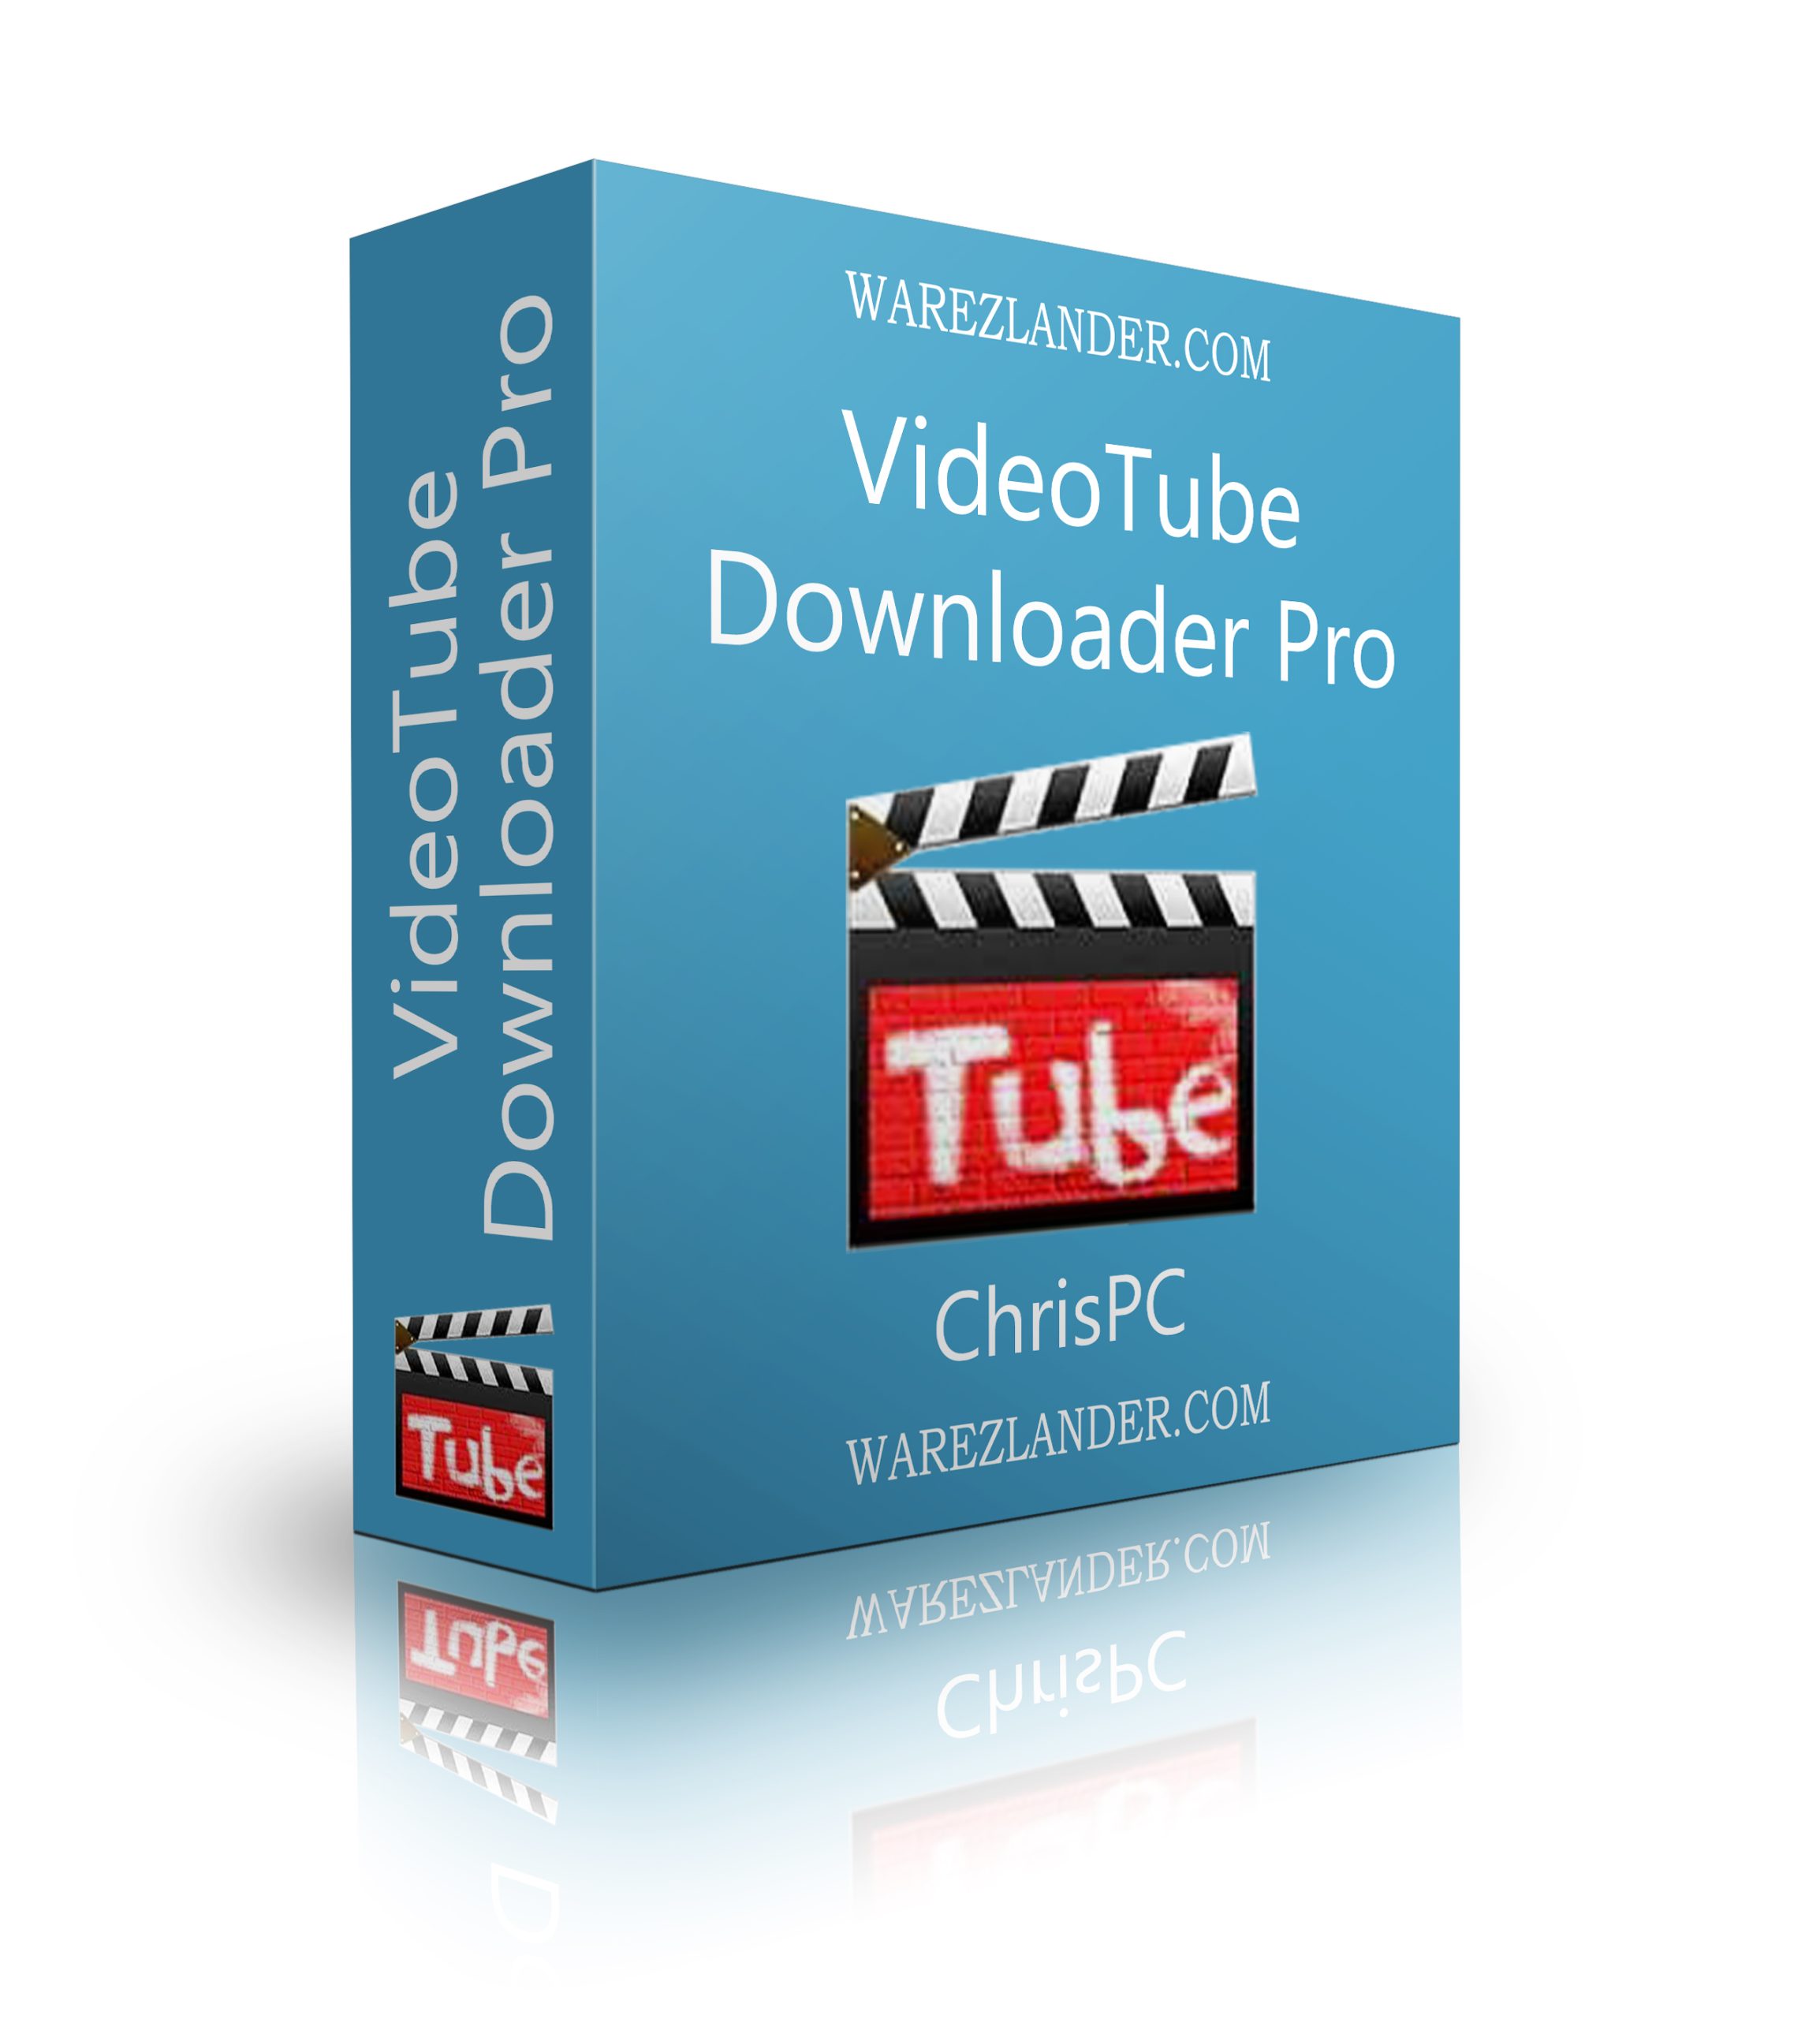 ChrisPC VideoTube Downloader Pro Full Version